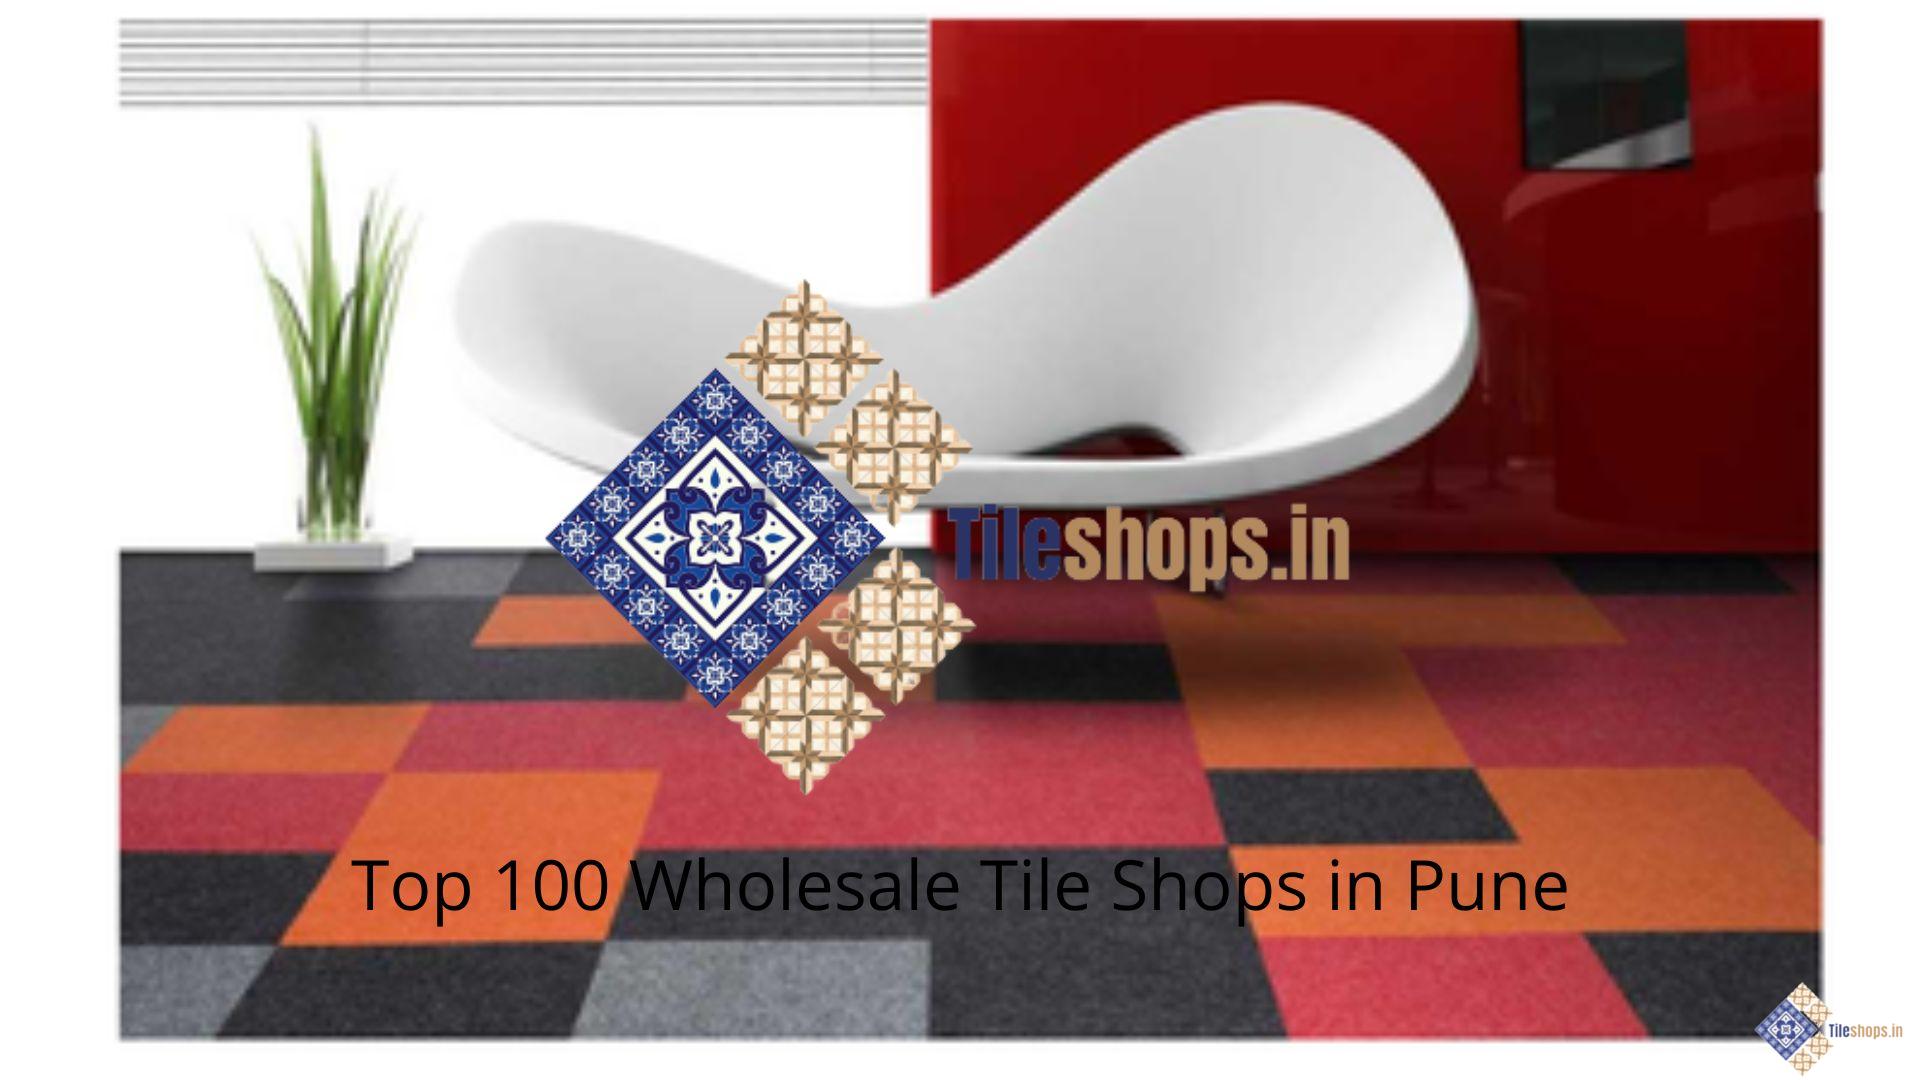 Top 100 Wholesale Tile Shops in Pune